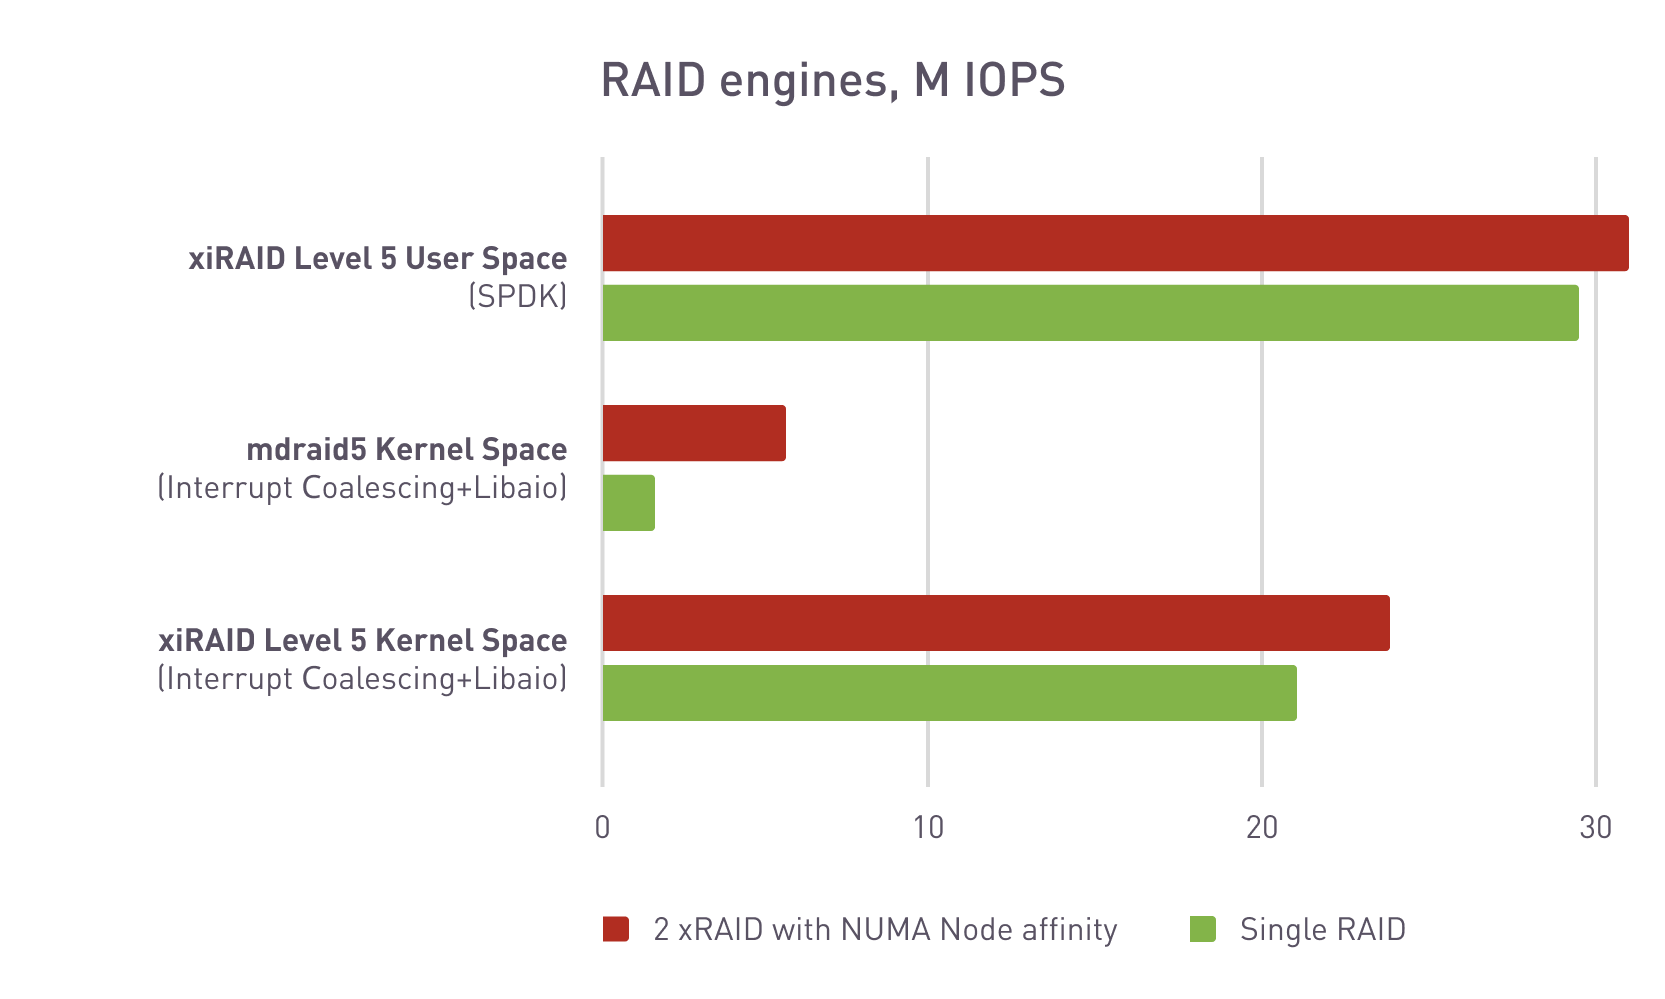 RAID engines comparison